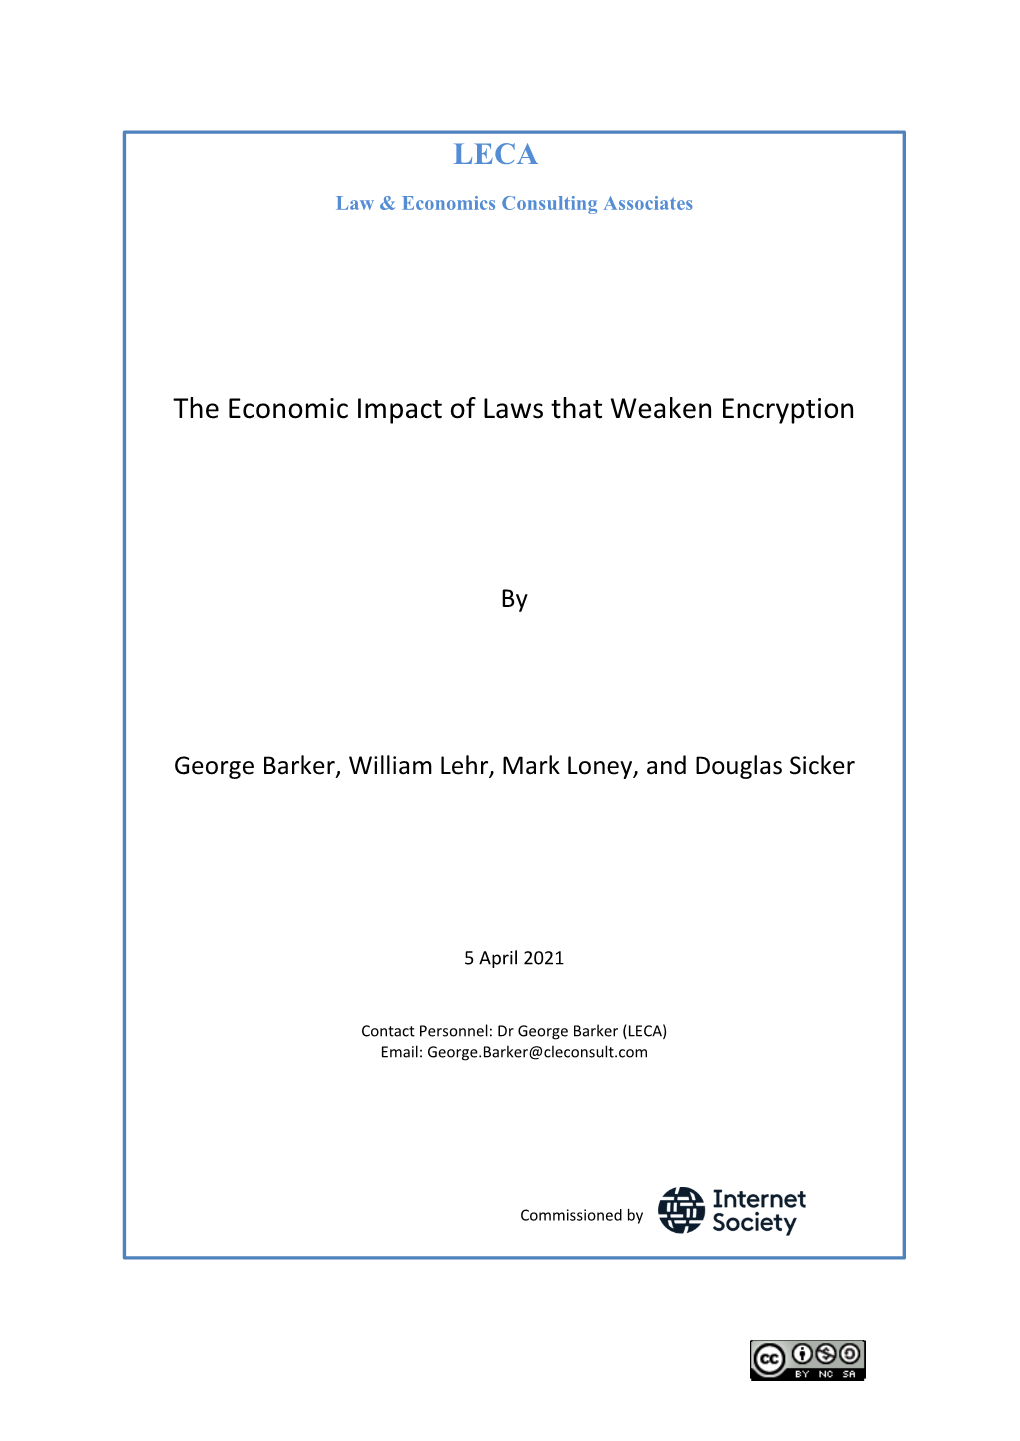 The Economic Impact of Laws That Weaken Encryption LECA